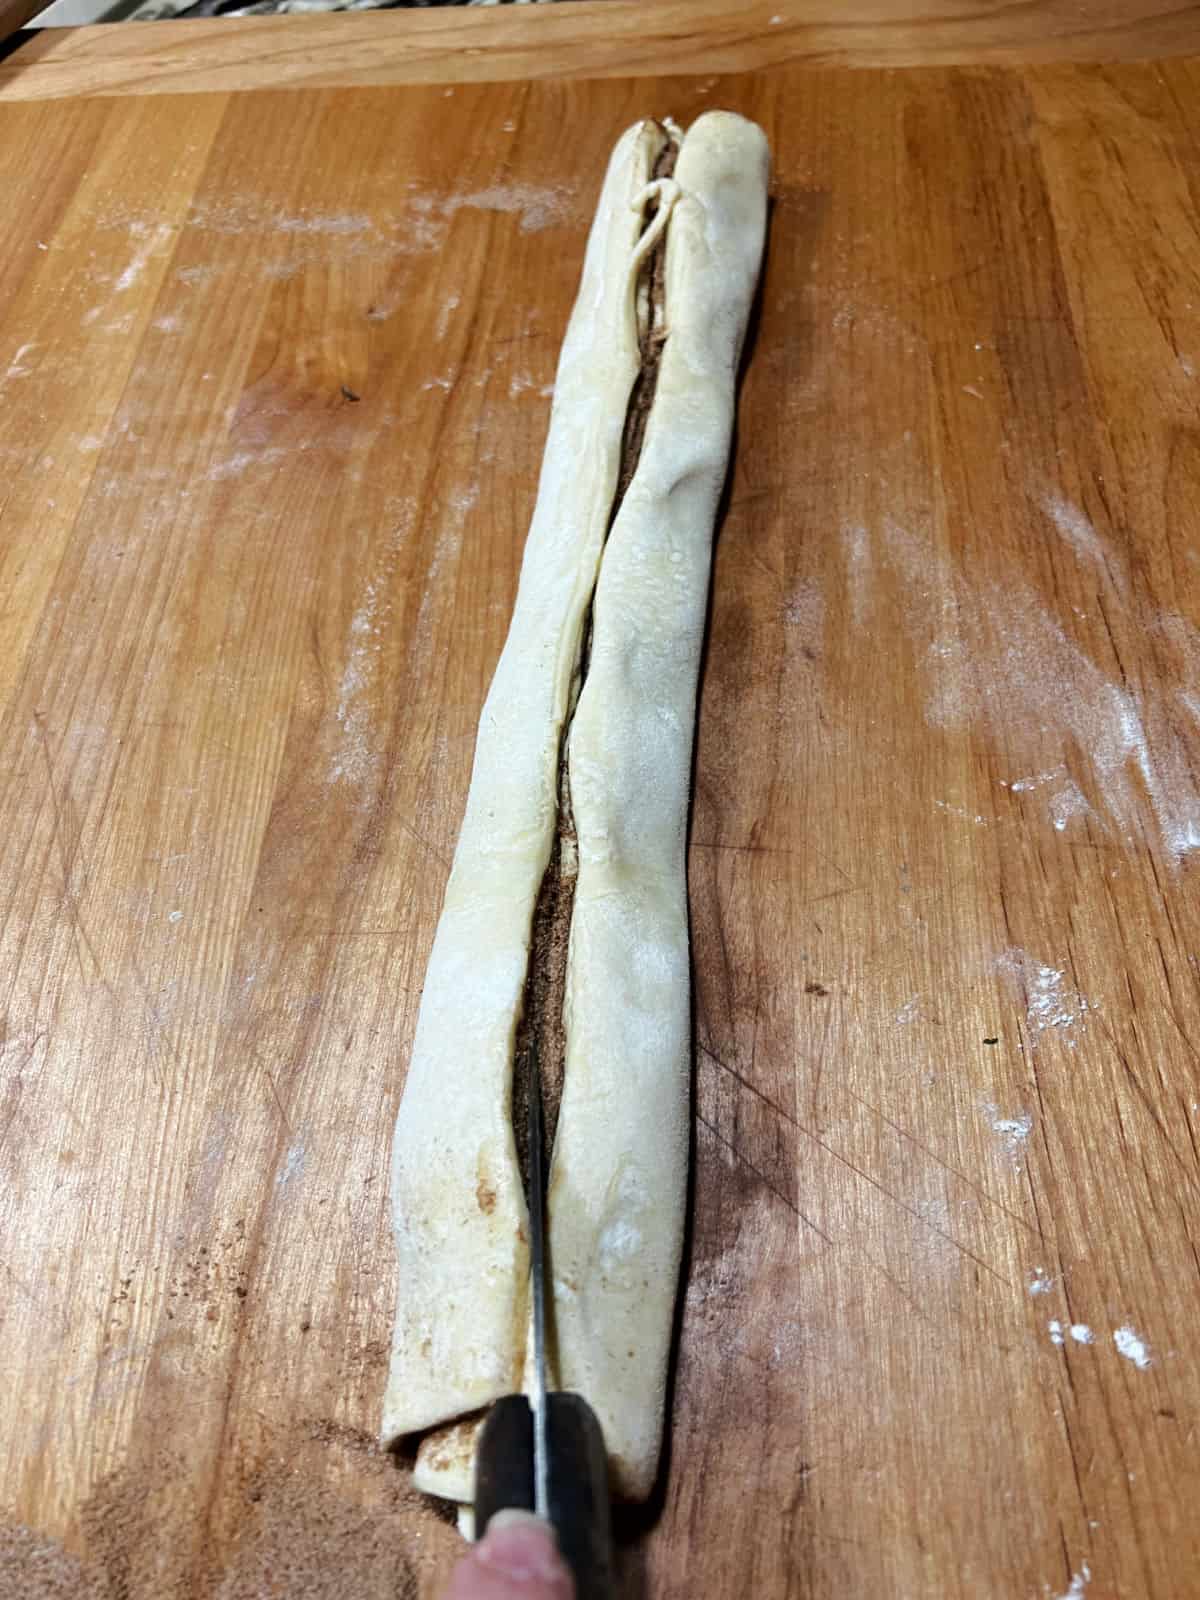 Cutting into the log shaped cruffin dough.